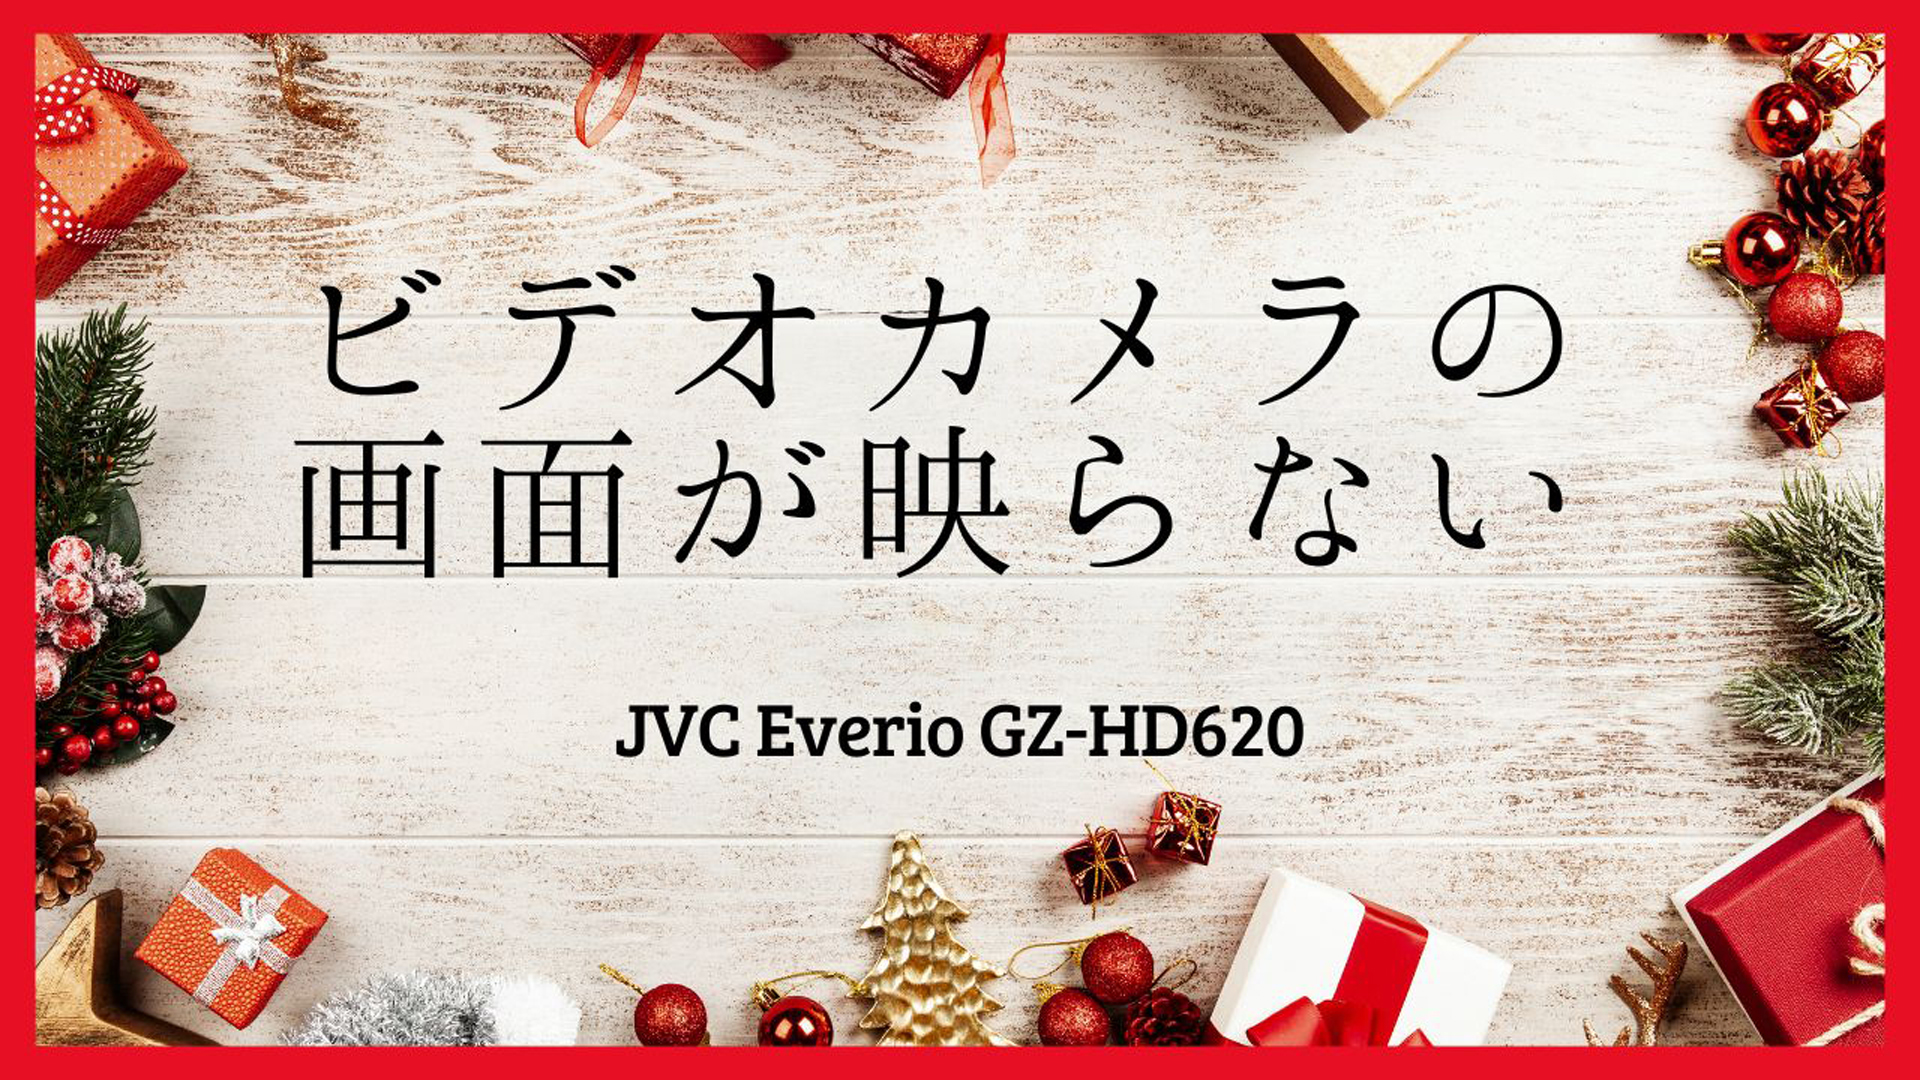 JVC Everio GZ-HD620故障からの見事な復旧事例！液晶不良でも諦めないで